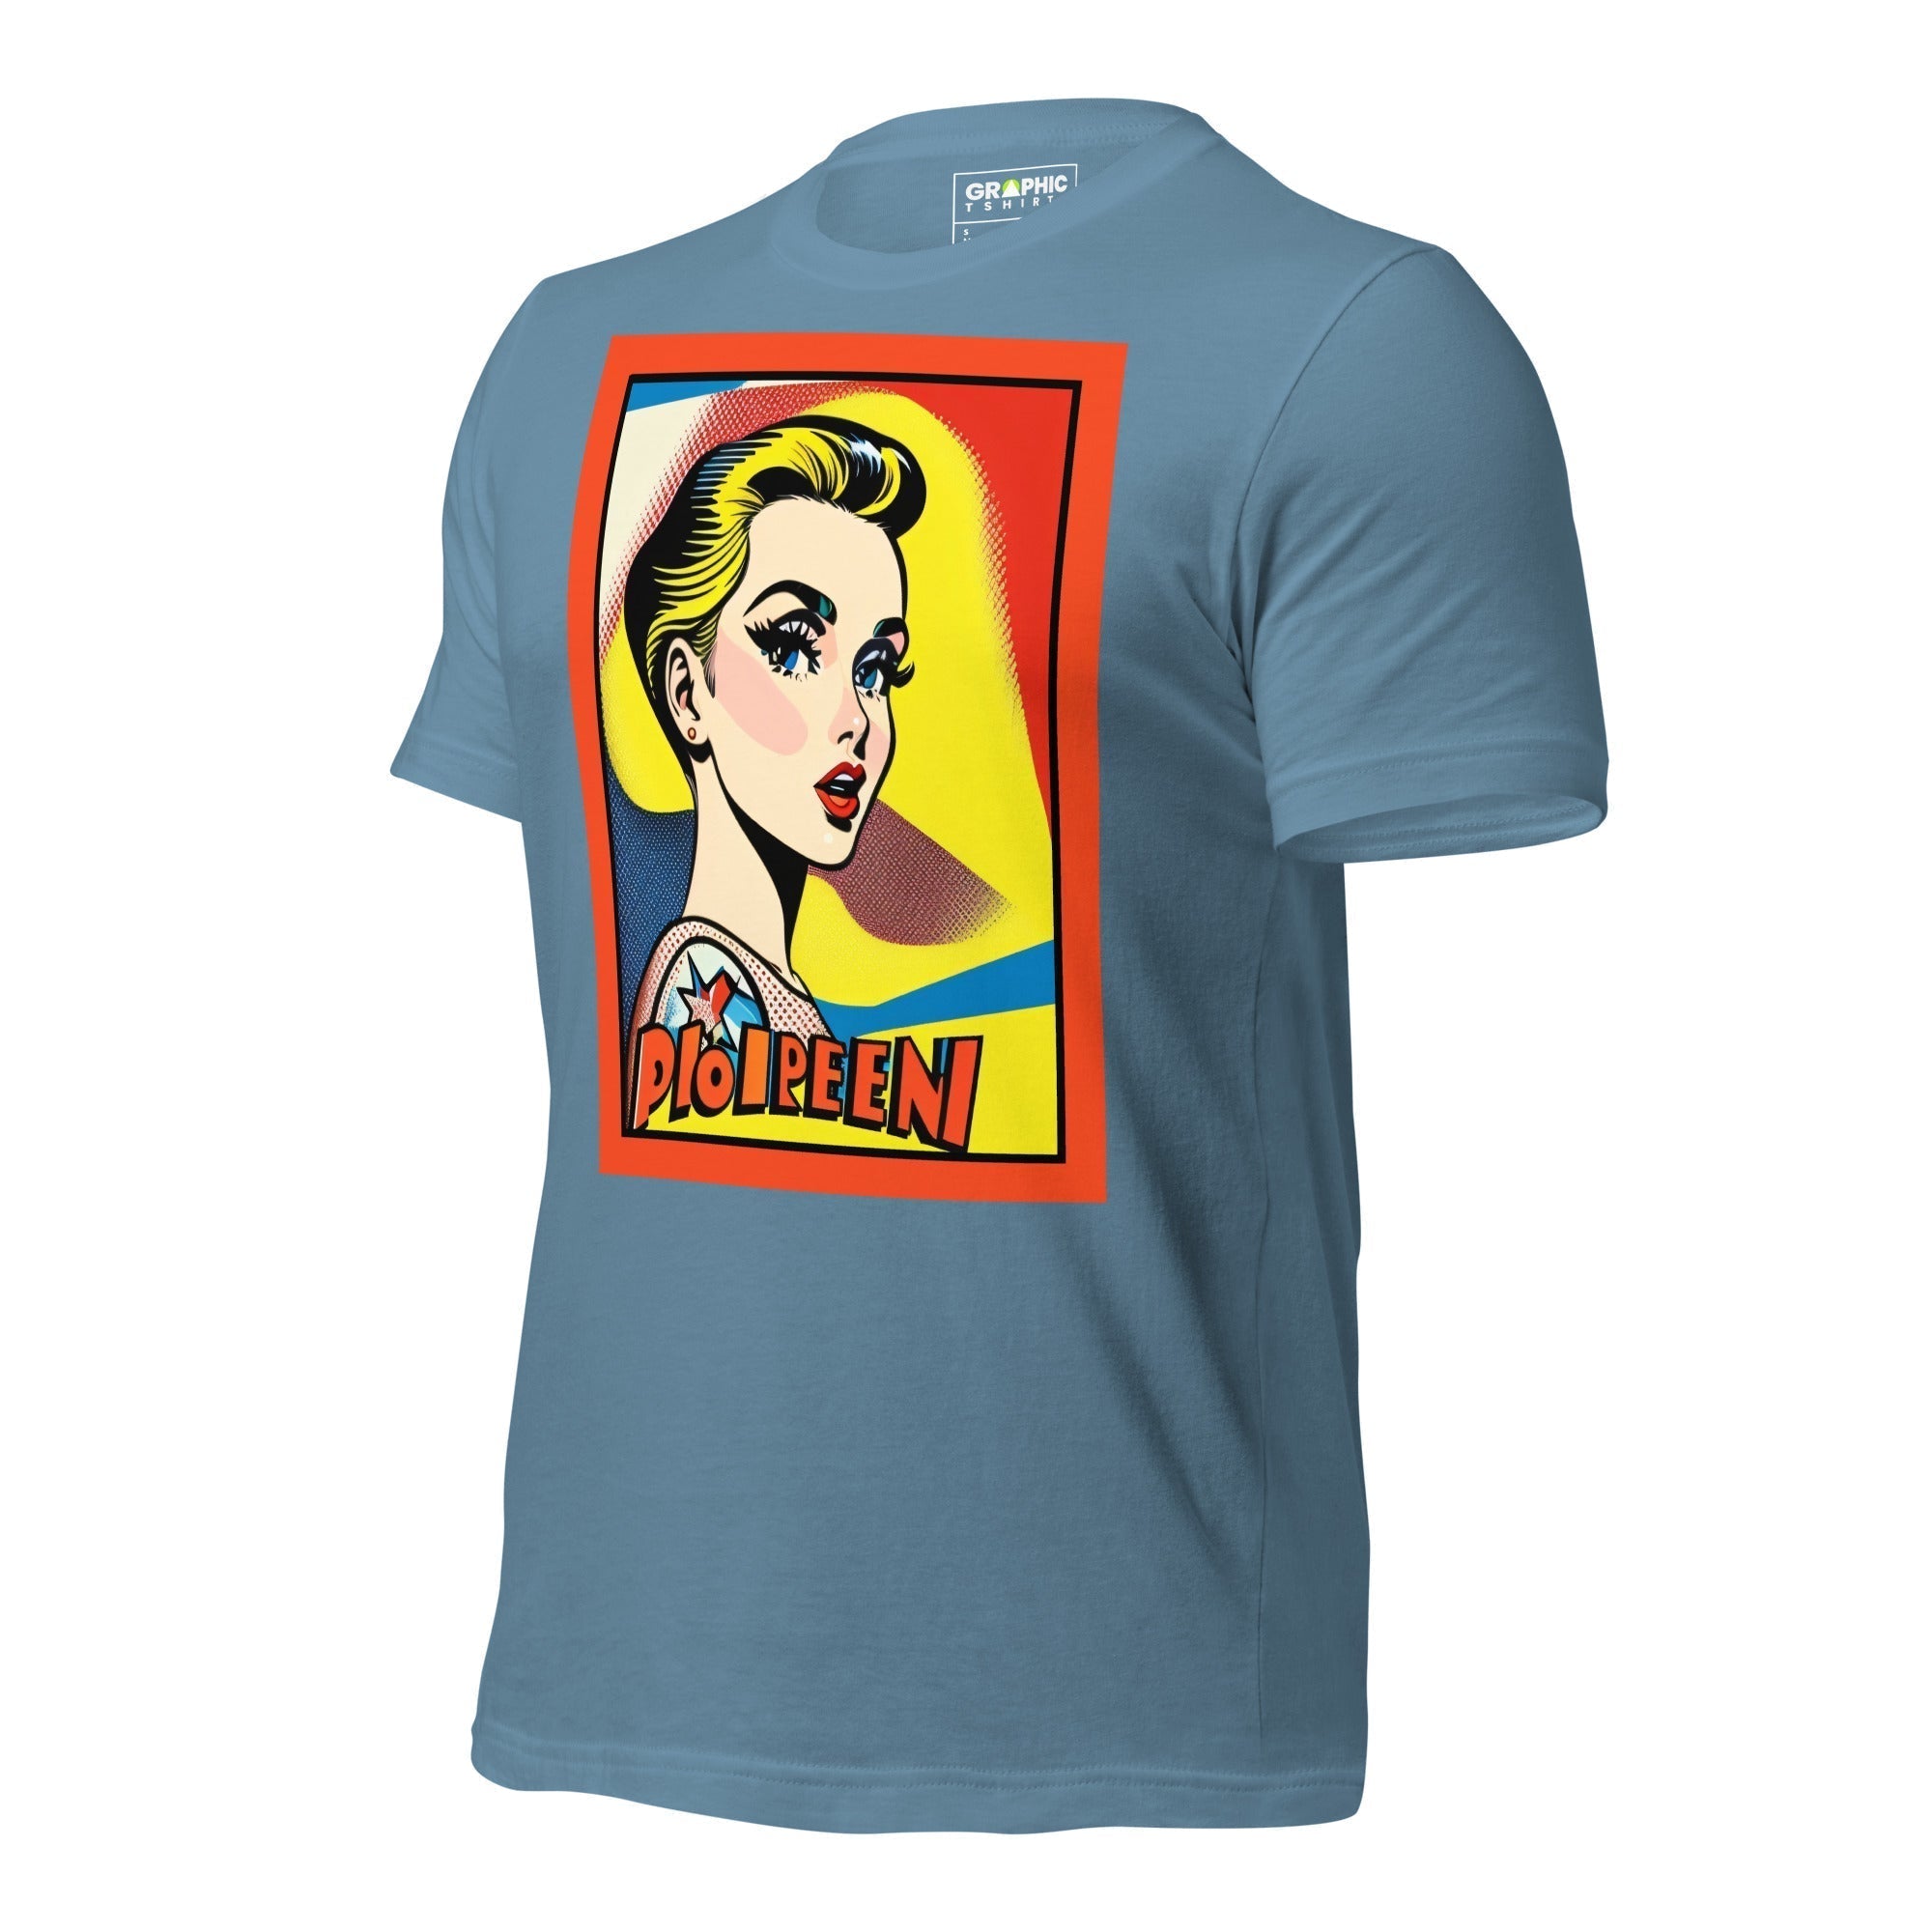 Unisex Crew Neck T-Shirt - Vintage American Comic Series v.18 - GRAPHIC T-SHIRTS